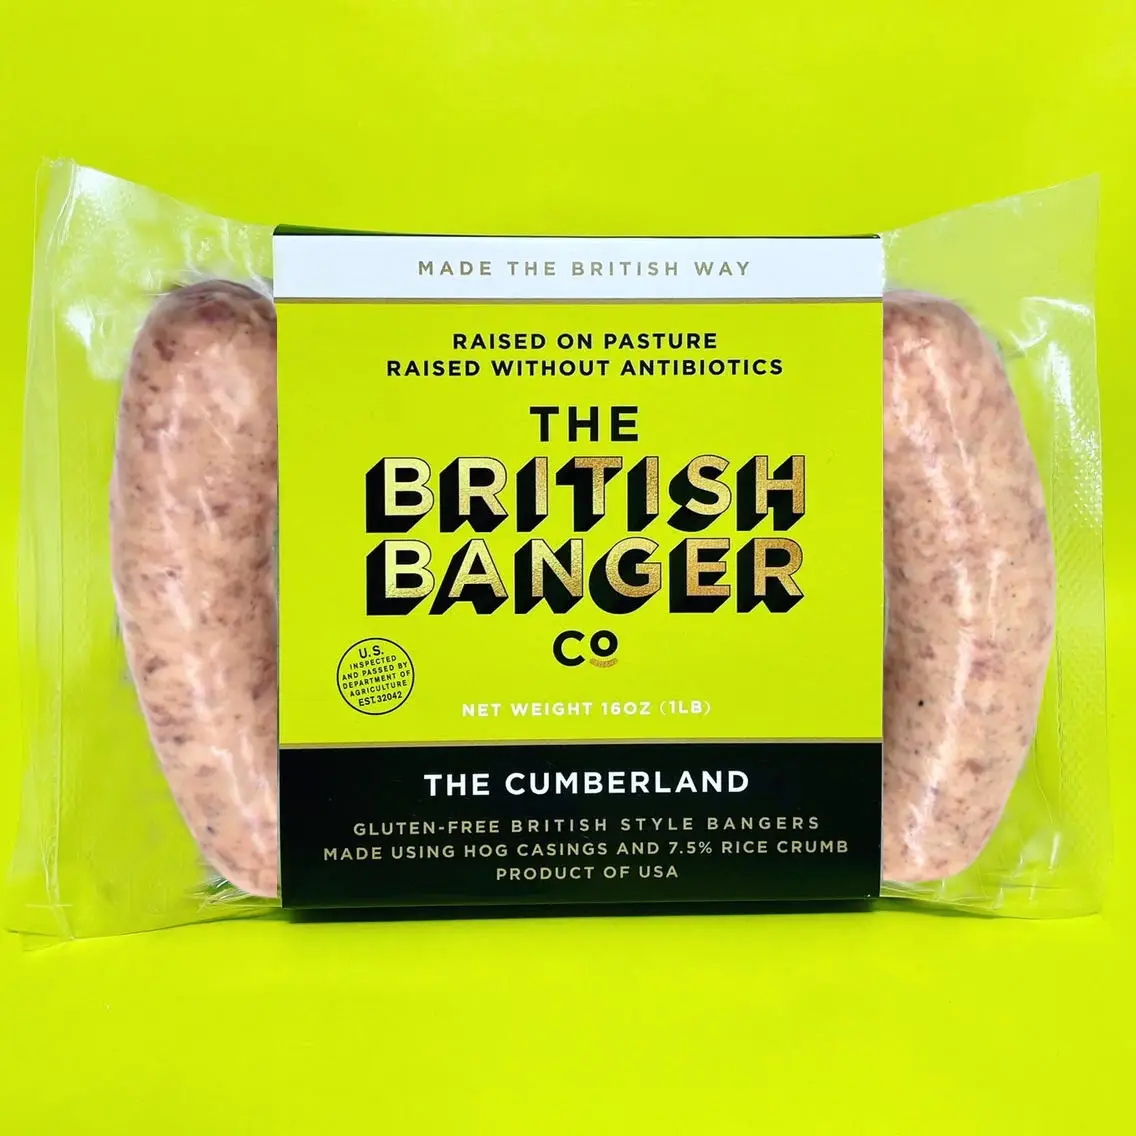 The Cumberland Sausages